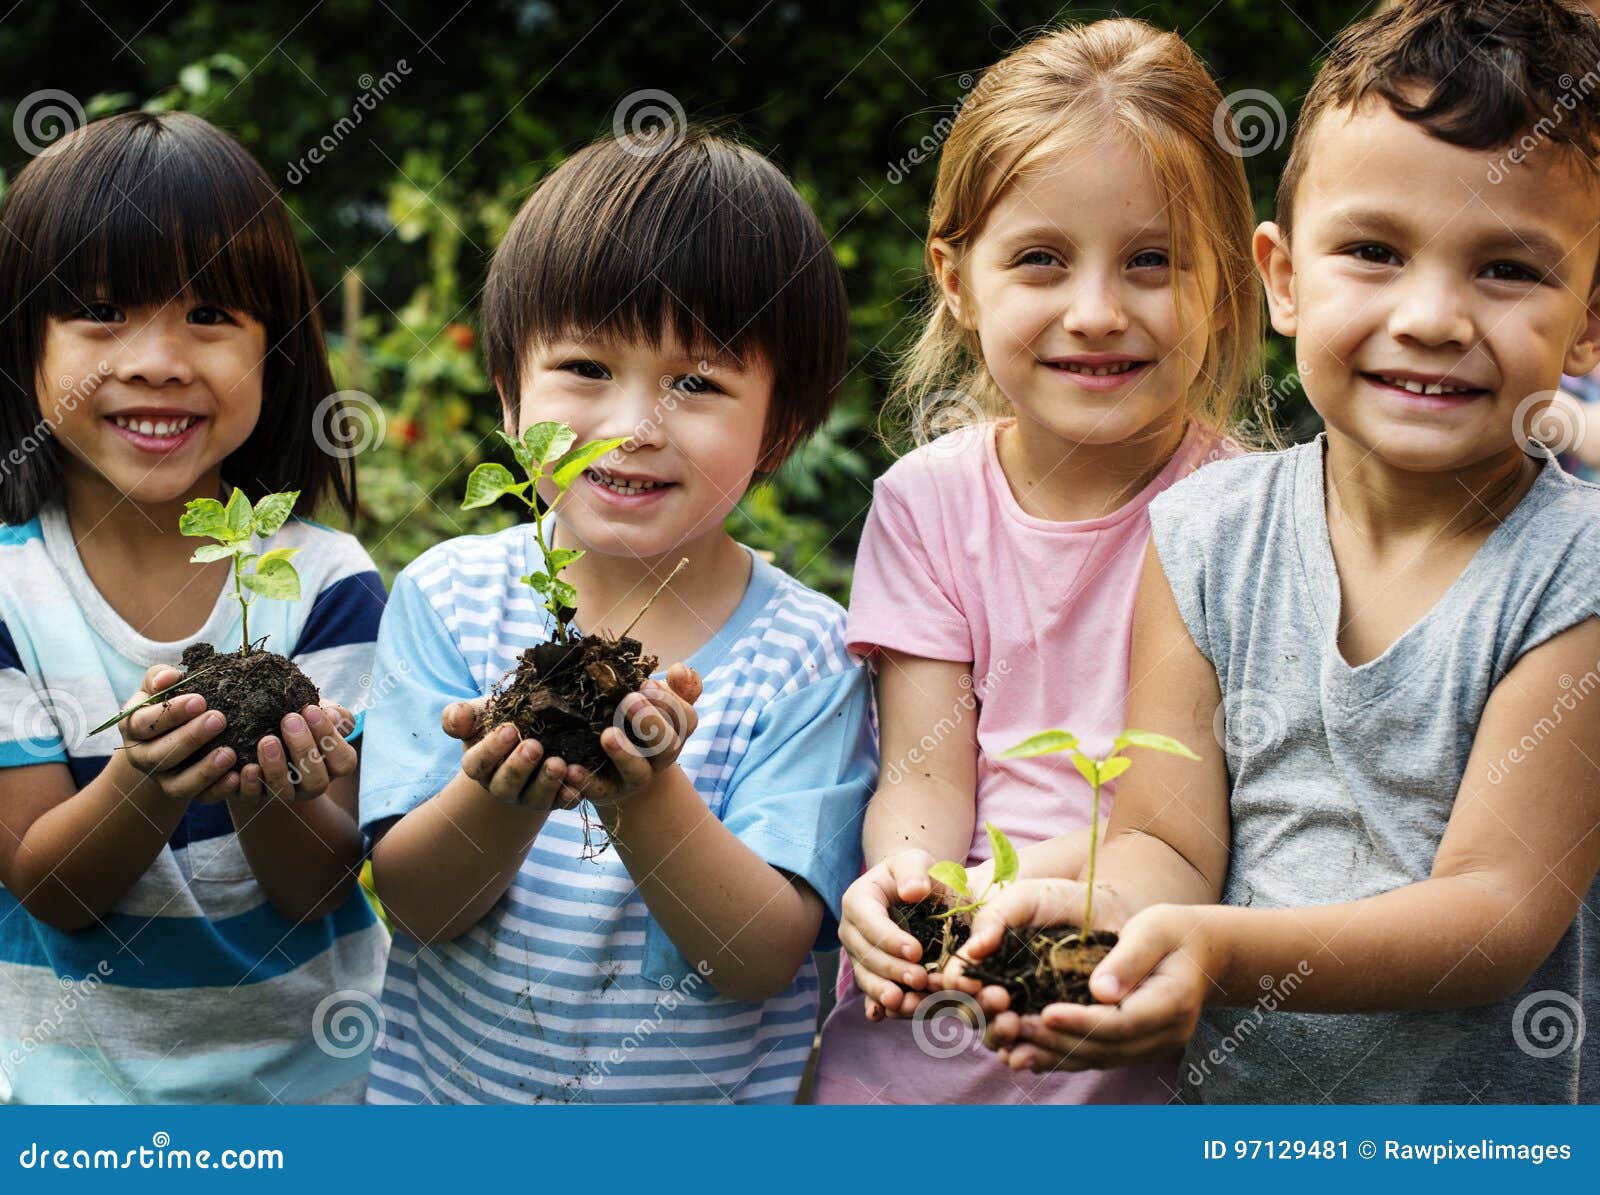 group of kindergarten kids friends gardening agriculture